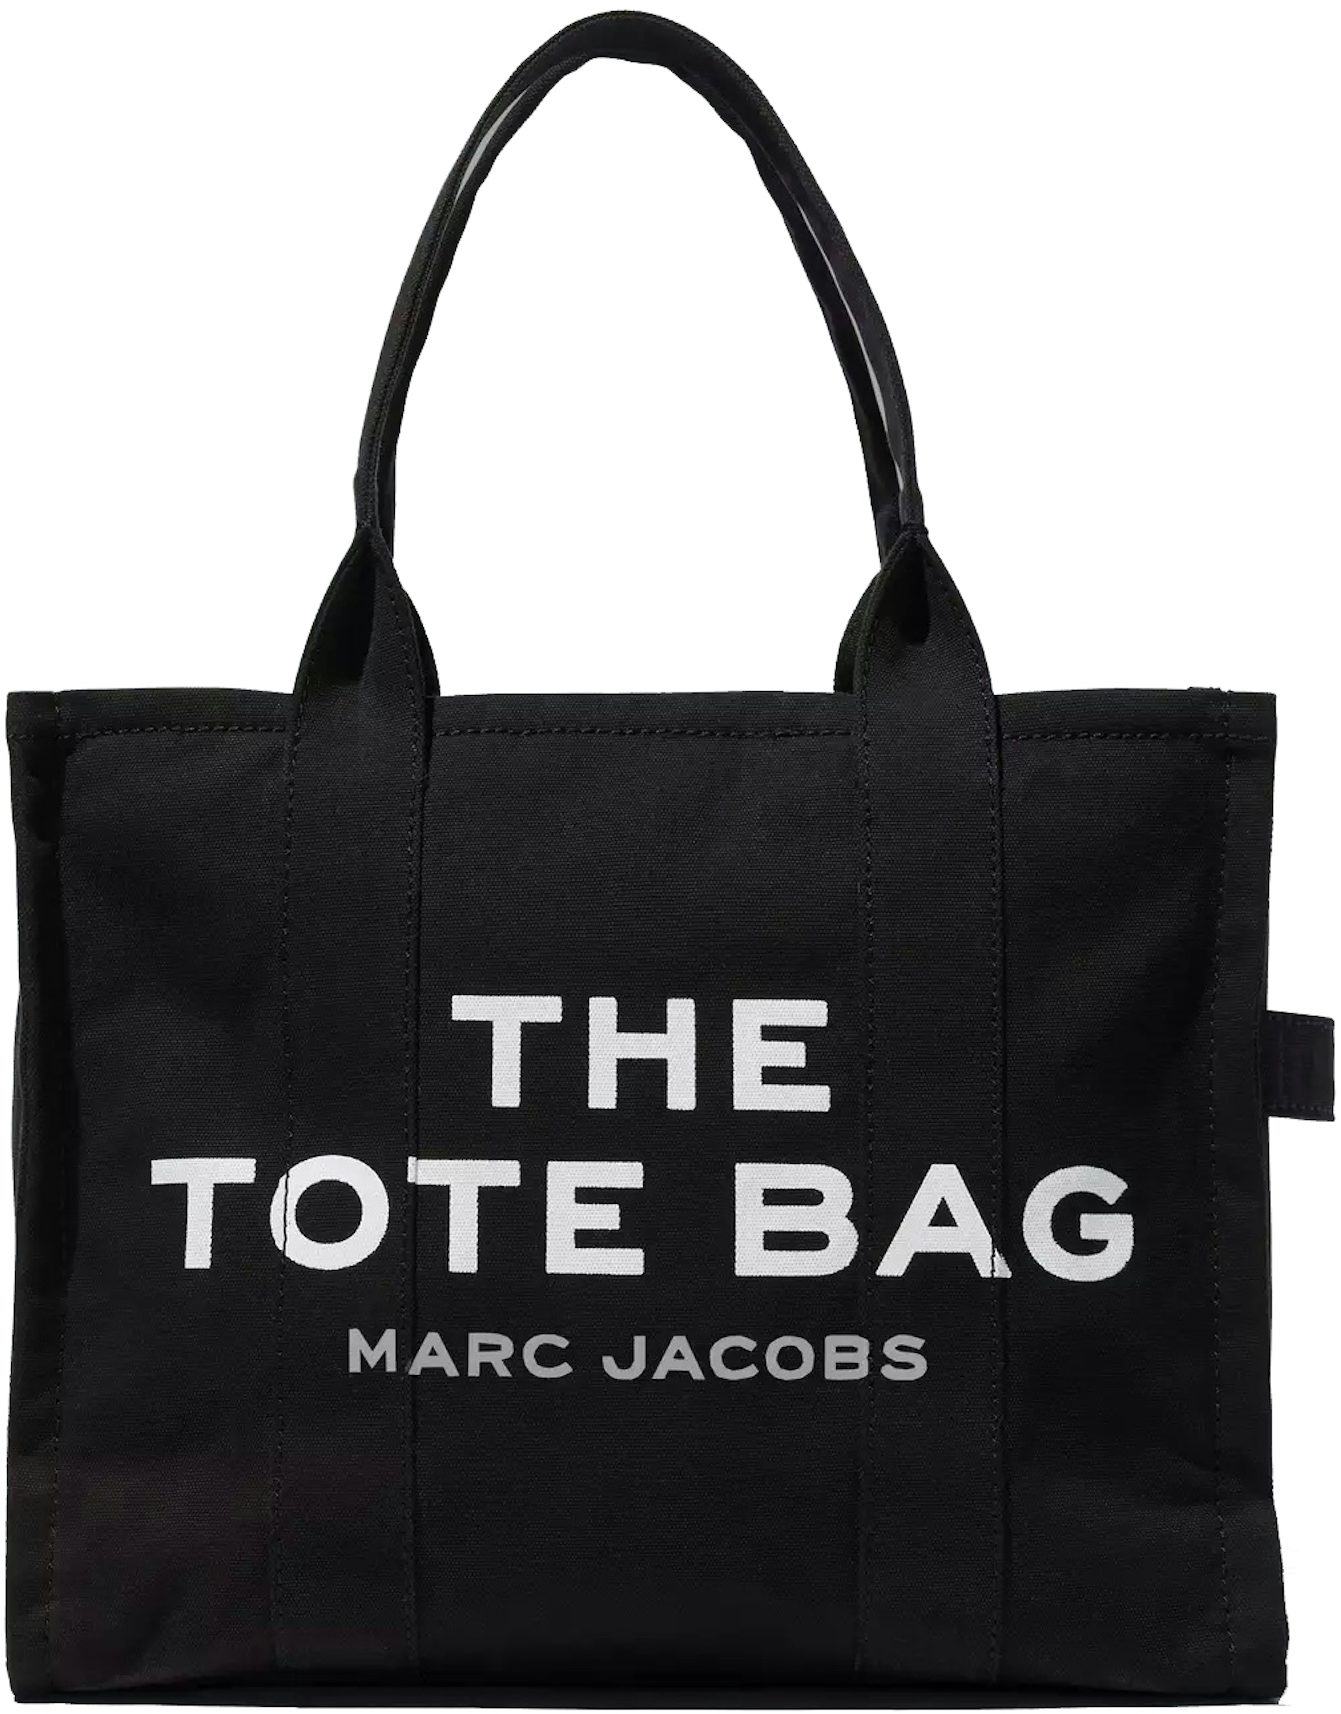 The Marc Jacobs Look Book  Street style bags, Black birkin bag